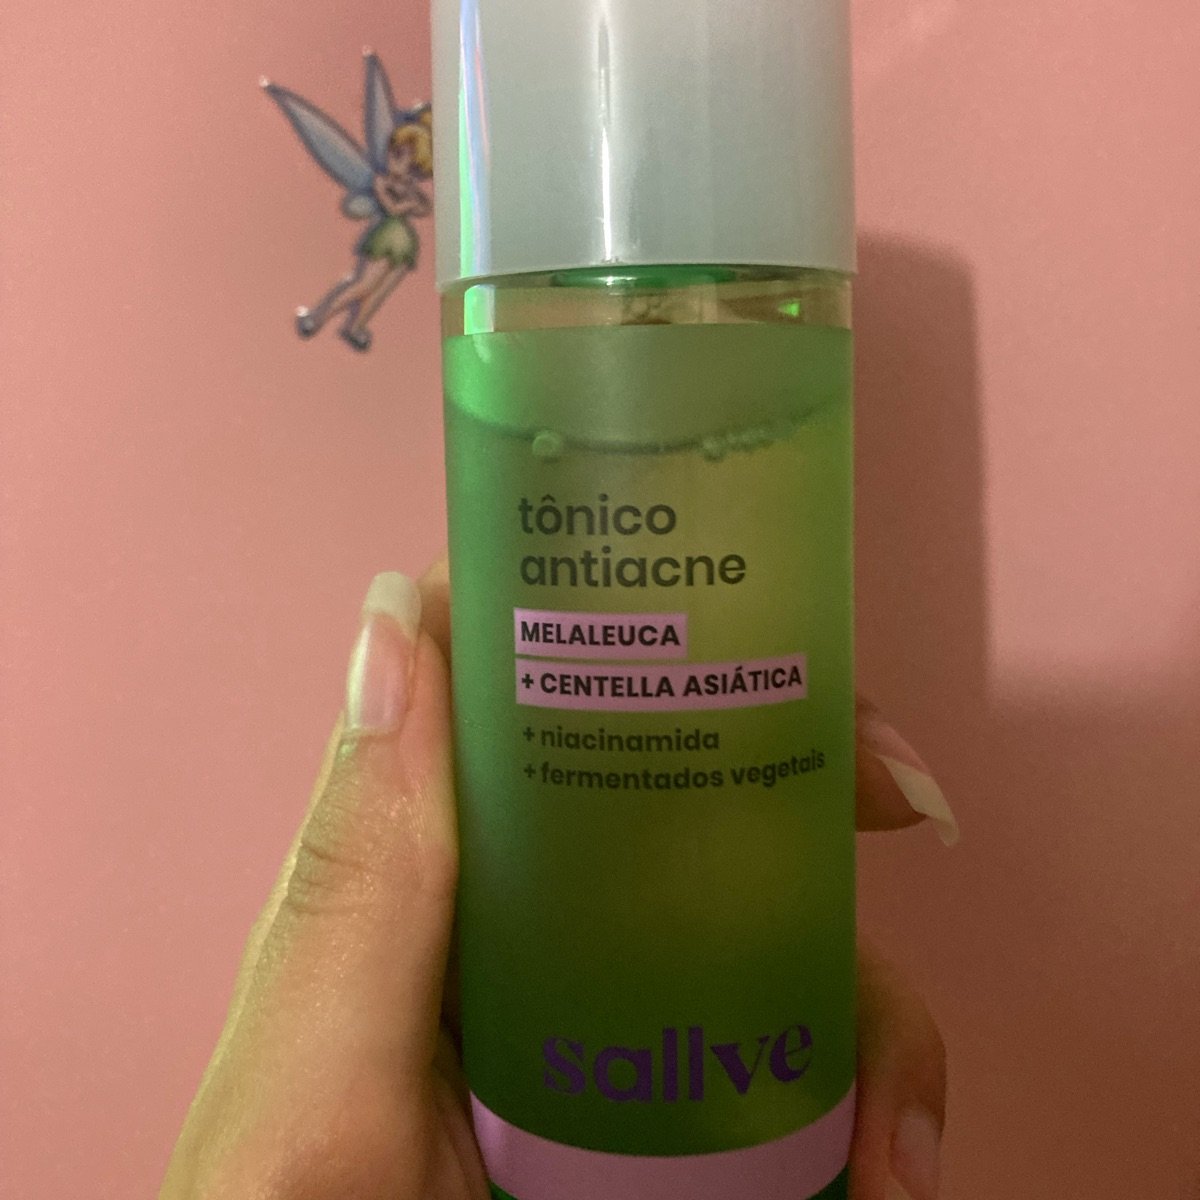 Sallve tonico anti acne Reviews | abillion